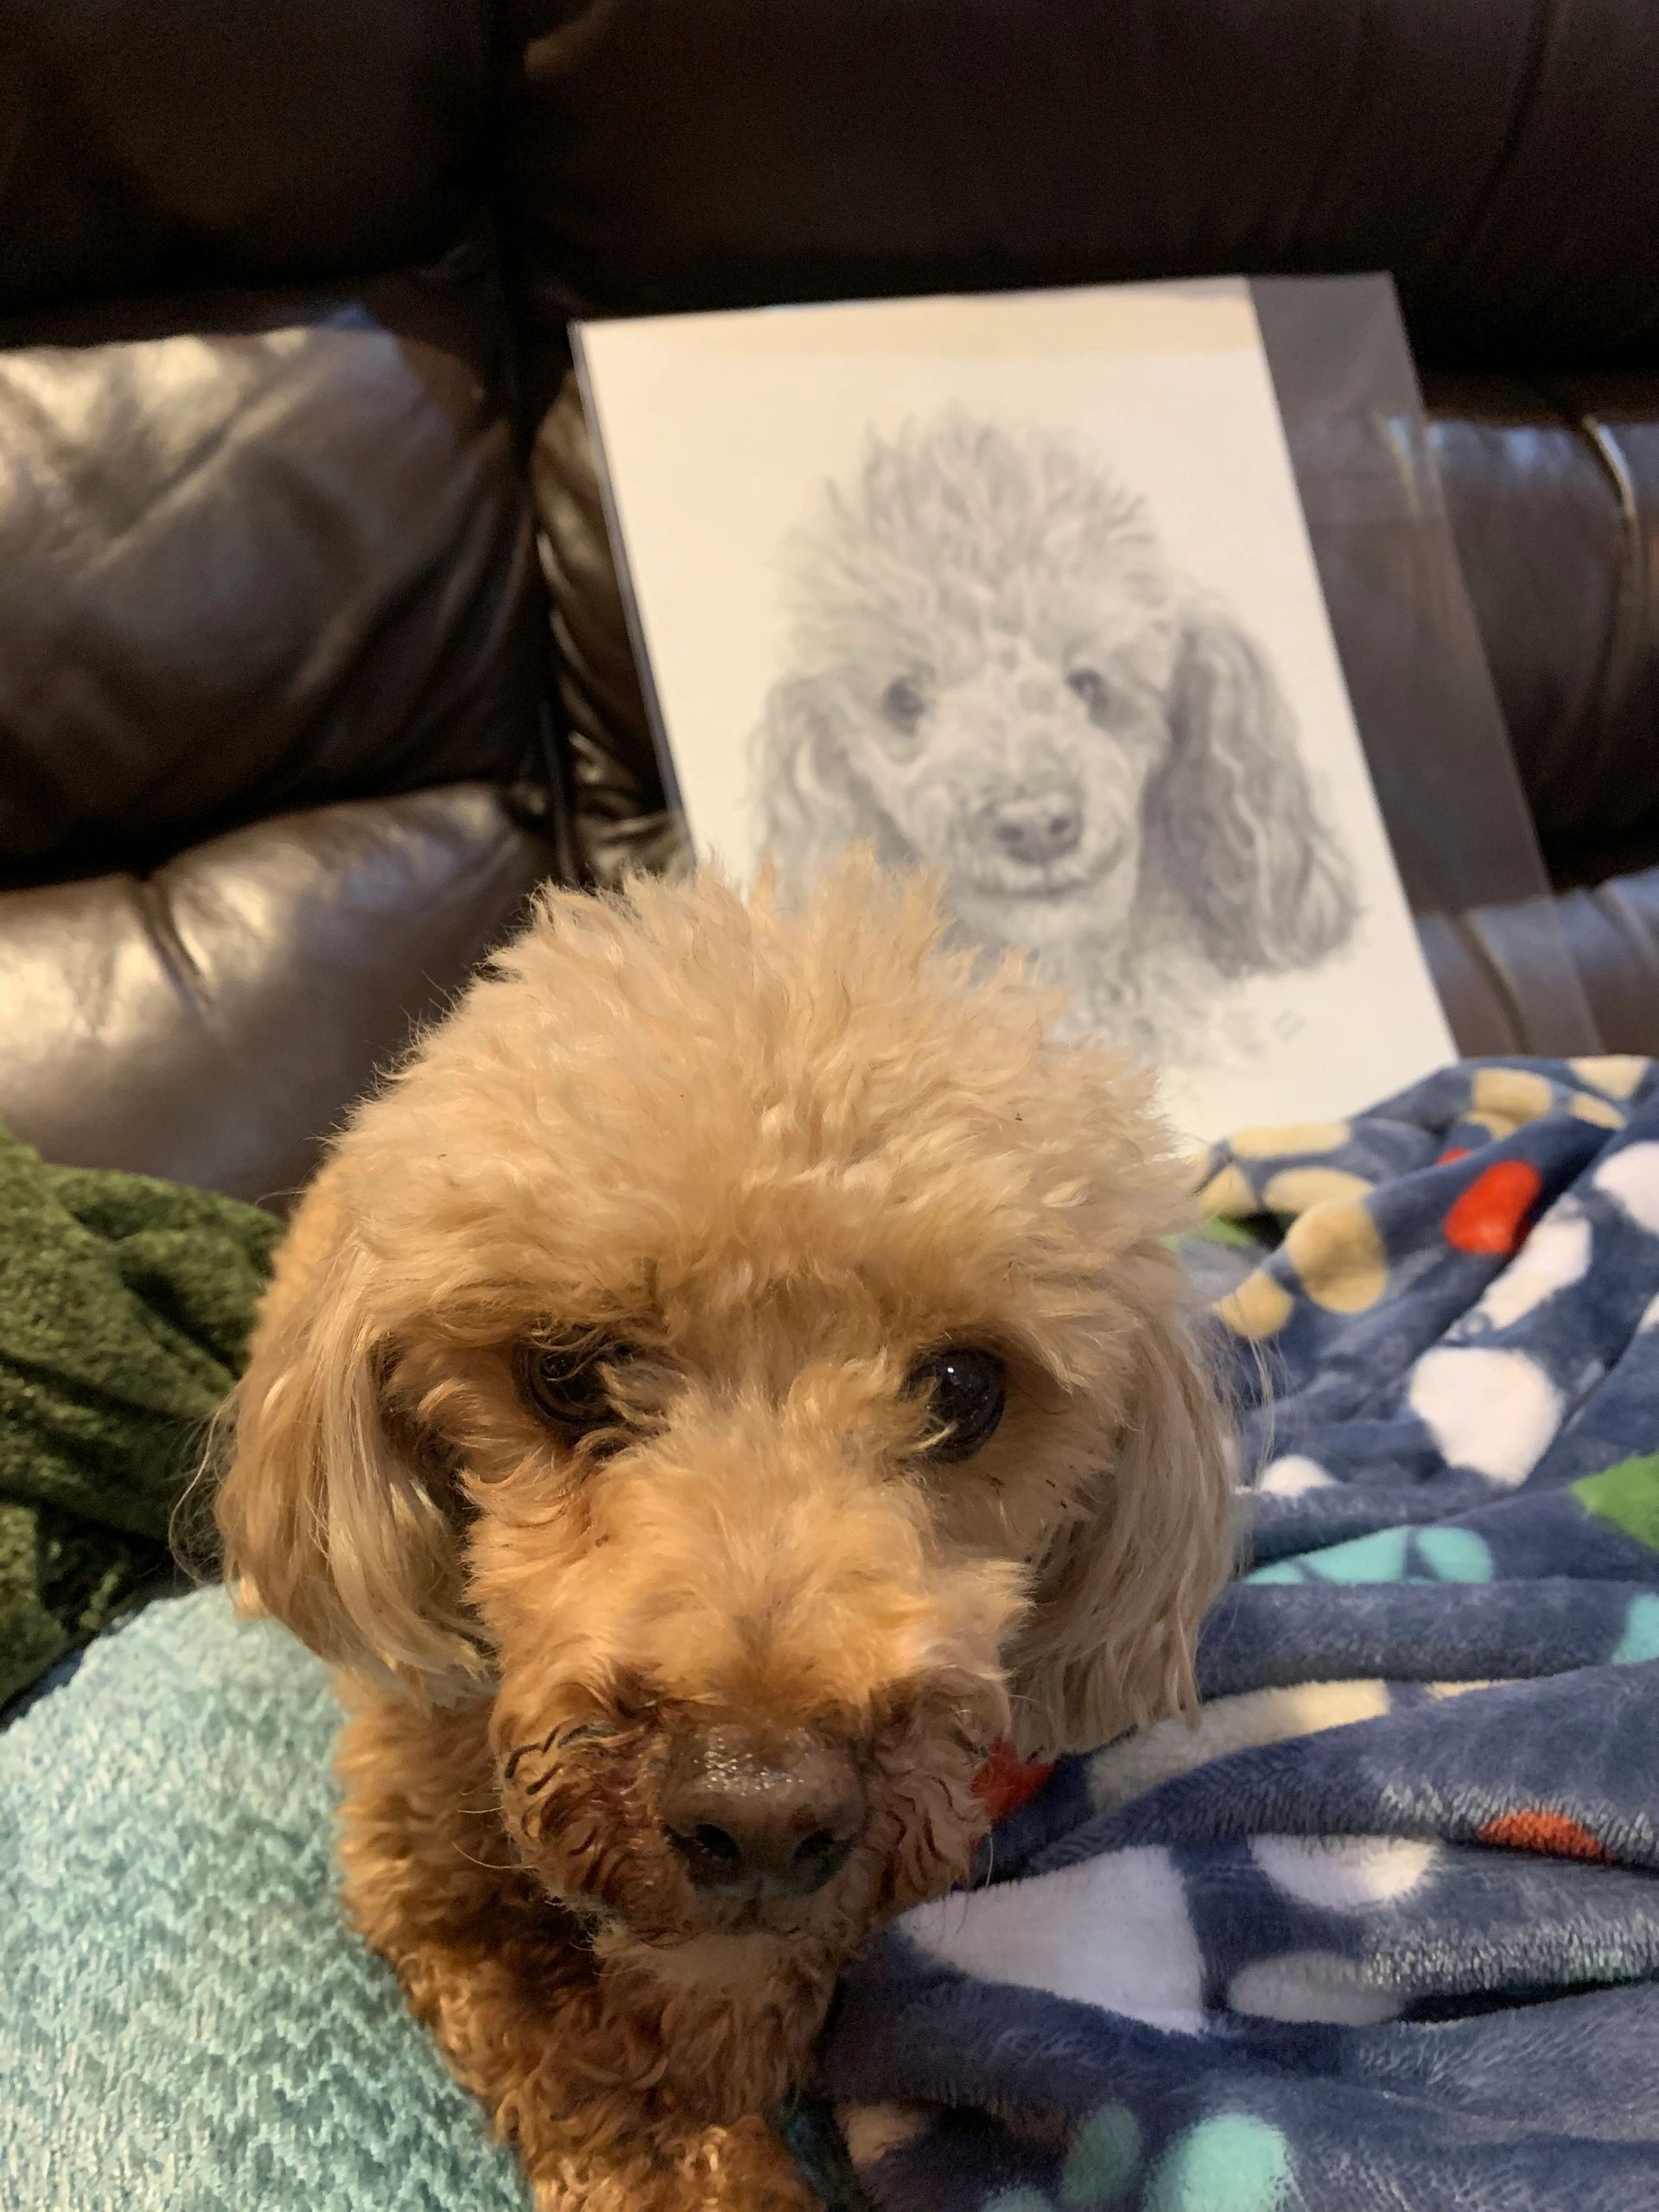 A poodle and her pet portrait